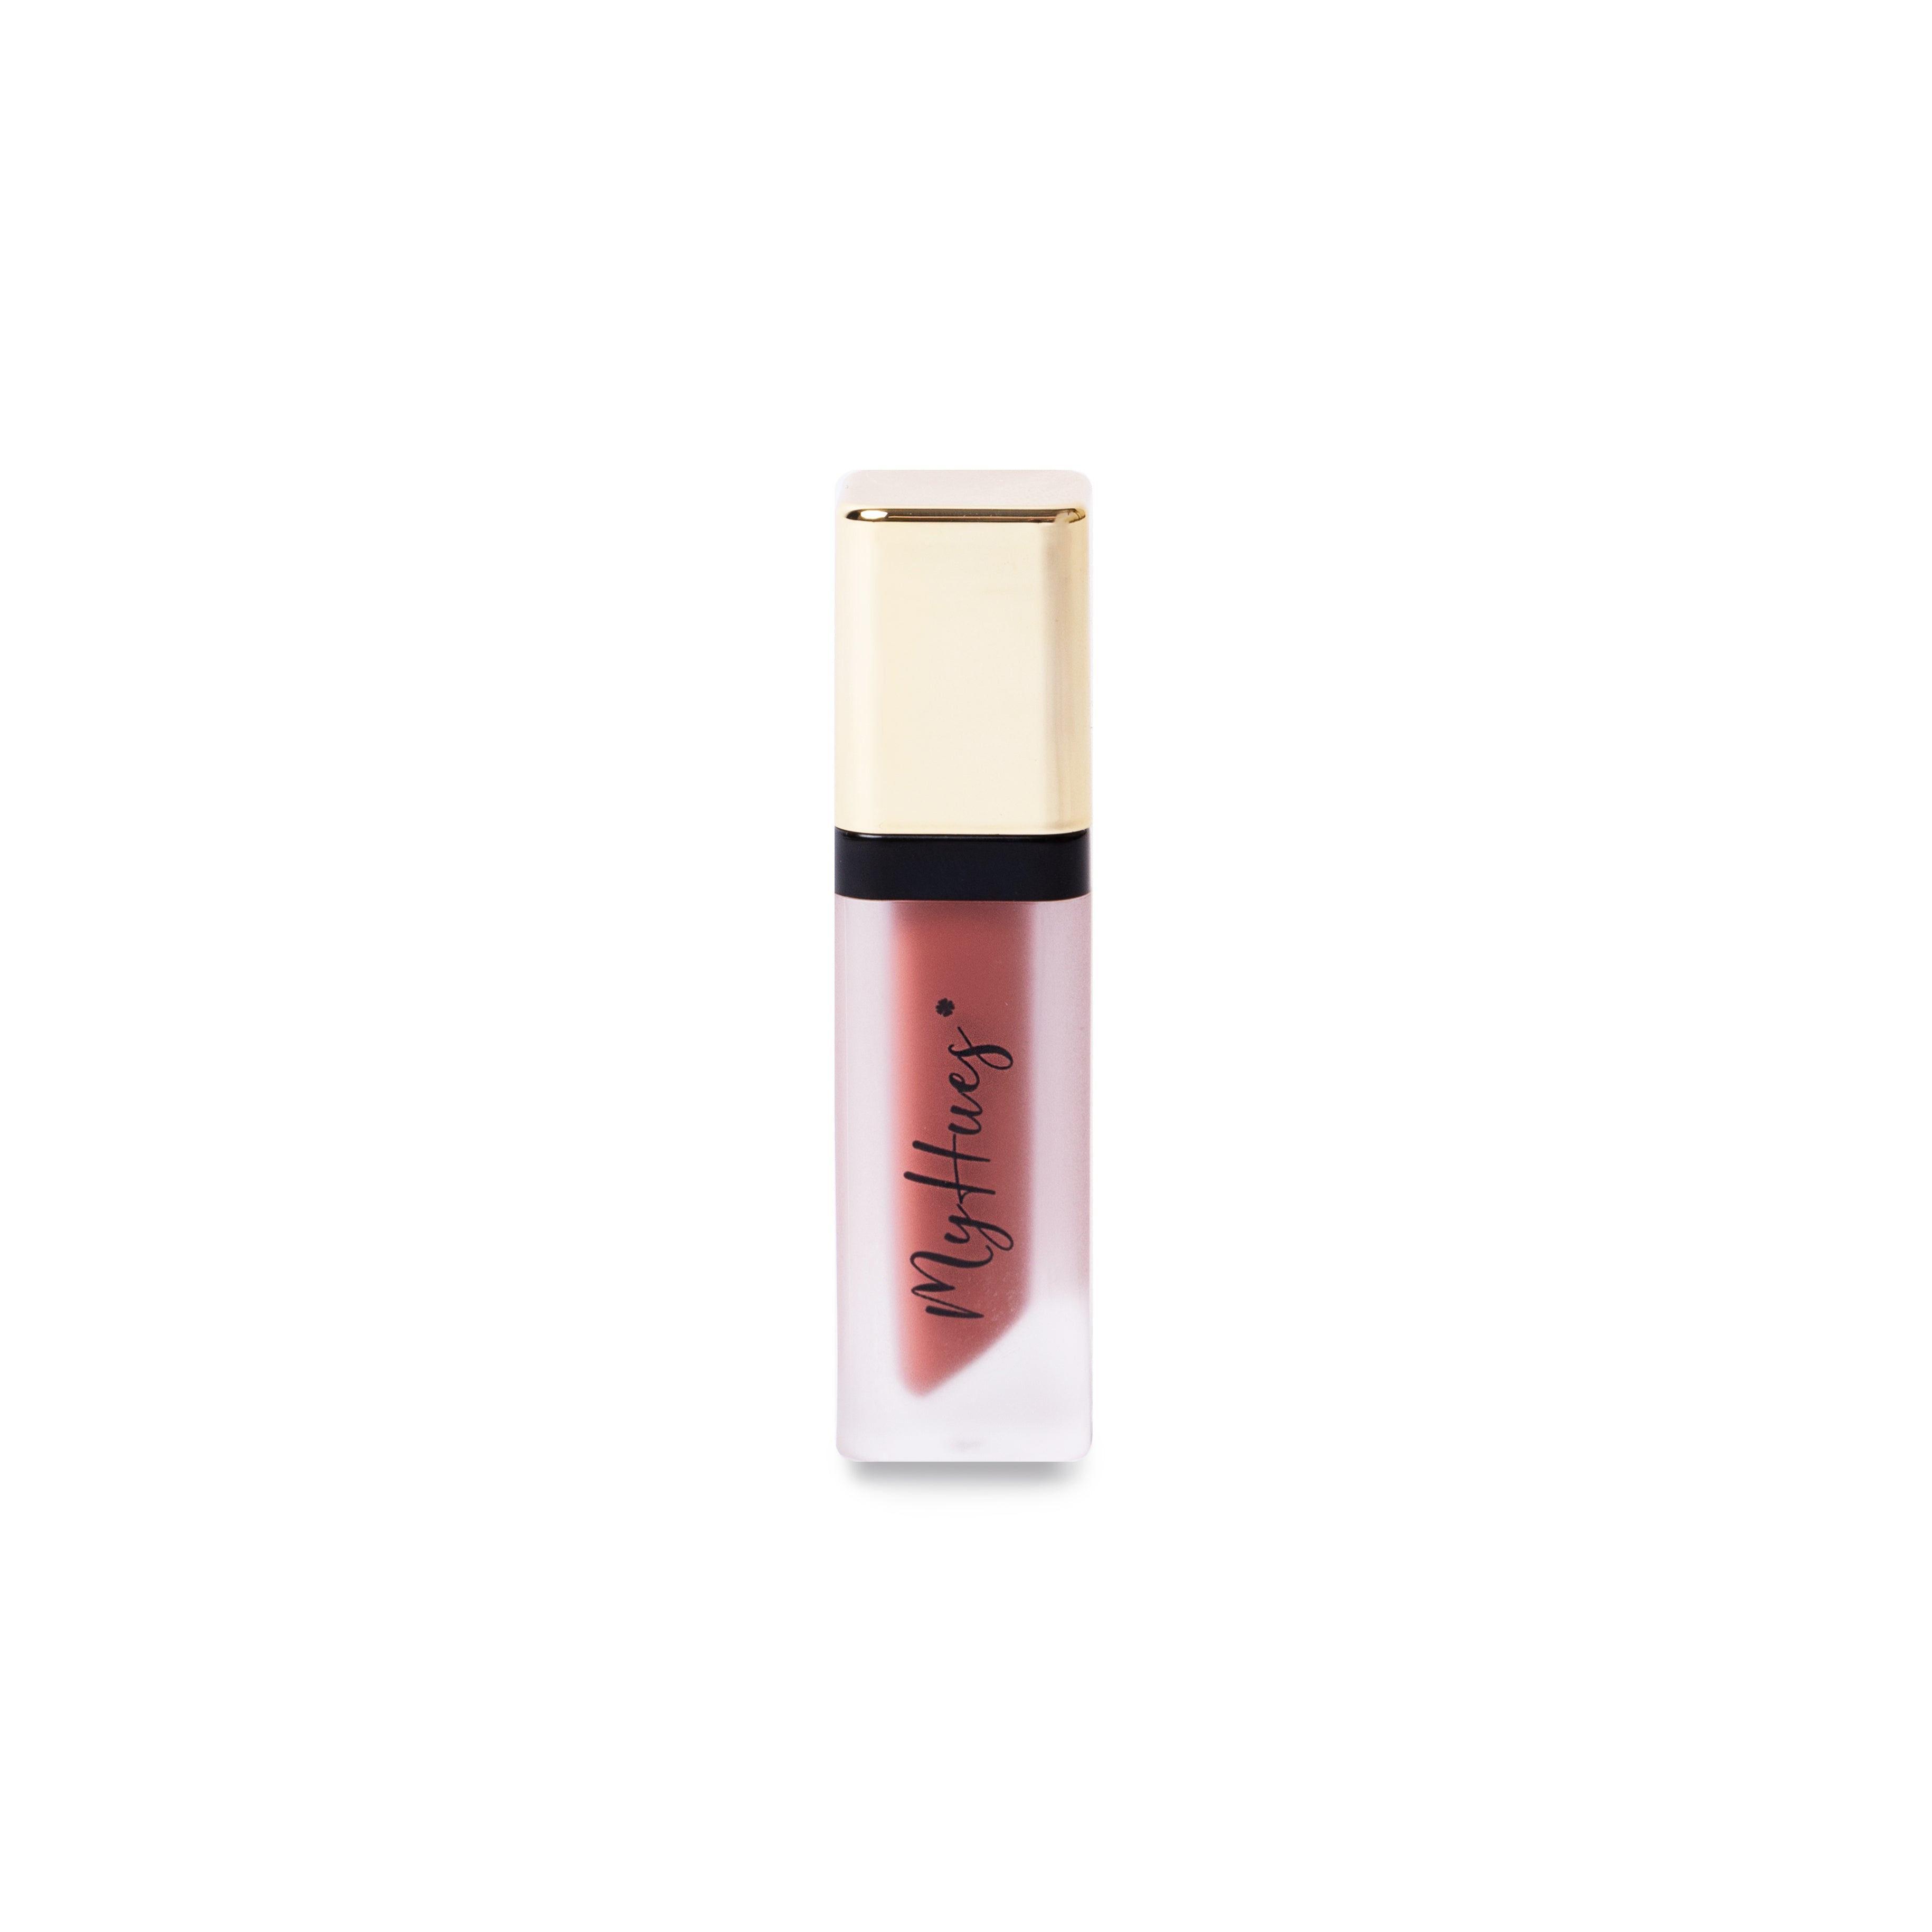 MyHues Lip Comfort Matte Liquid Lipstick Chashni (Warm-toned Brown)